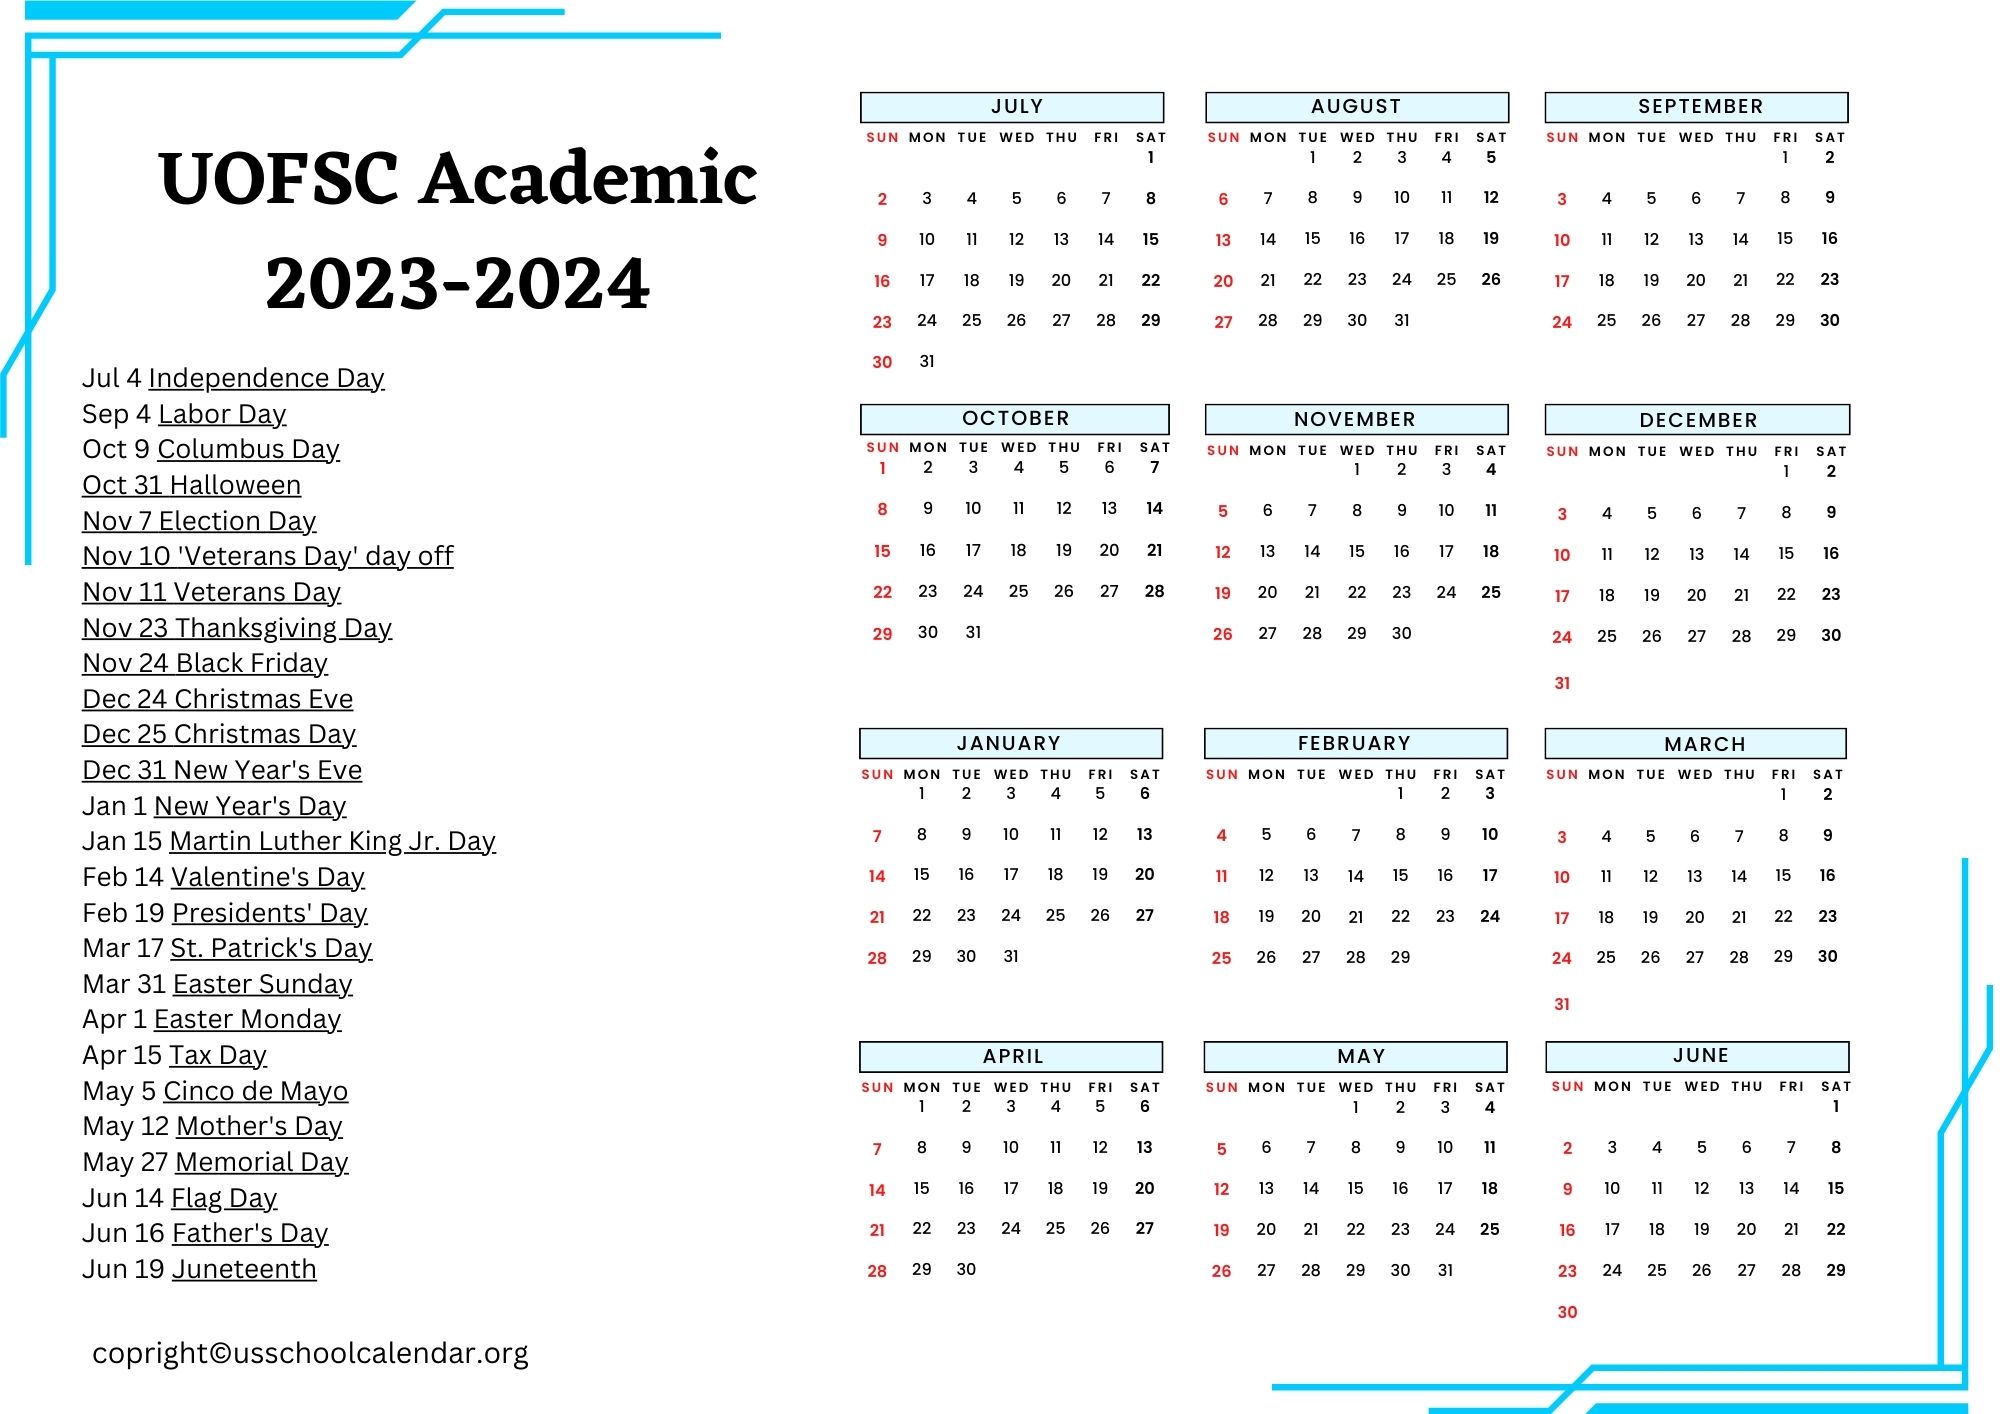 UOFSC Academic Calendar with Holidays 2023-2024